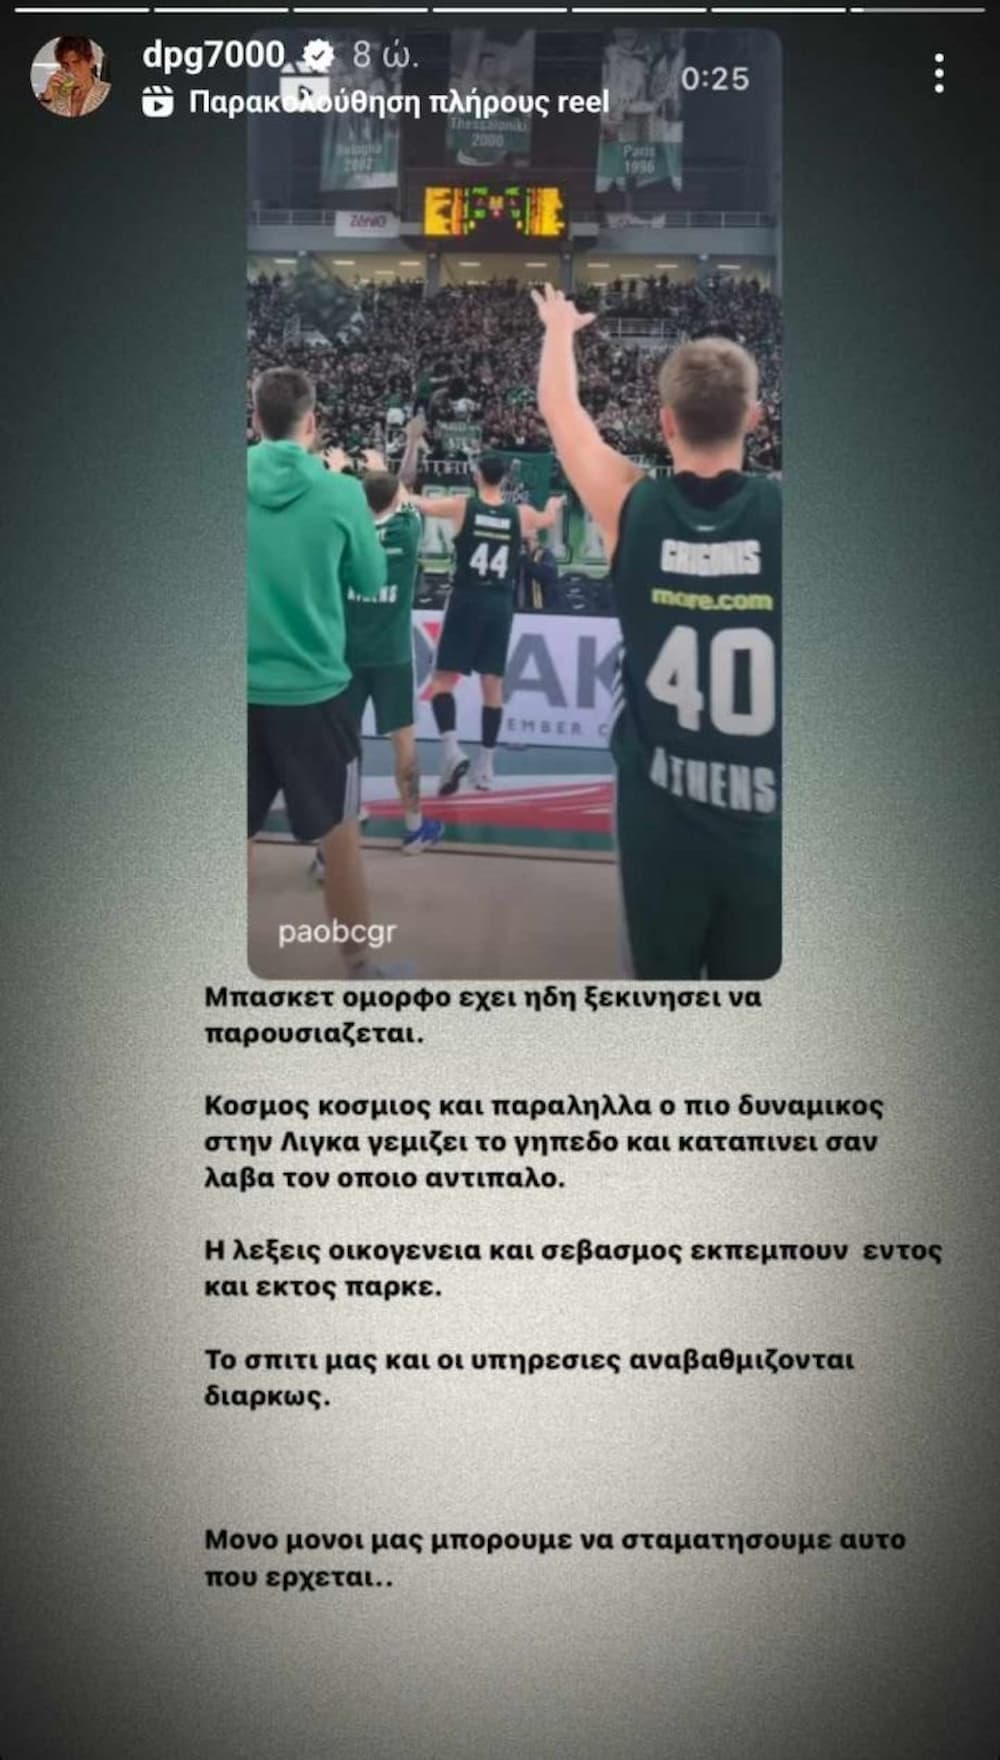 story2 1 - Γιαννακόπουλος: «Μπάσκετ όμορφο έχει ήδη ξεκινήσει να παρουσιάζεται - Οι λέξεις οικογένεια και σεβασμός εκπέμπουν εντός και εκτός παρκέ» (εικόνα)